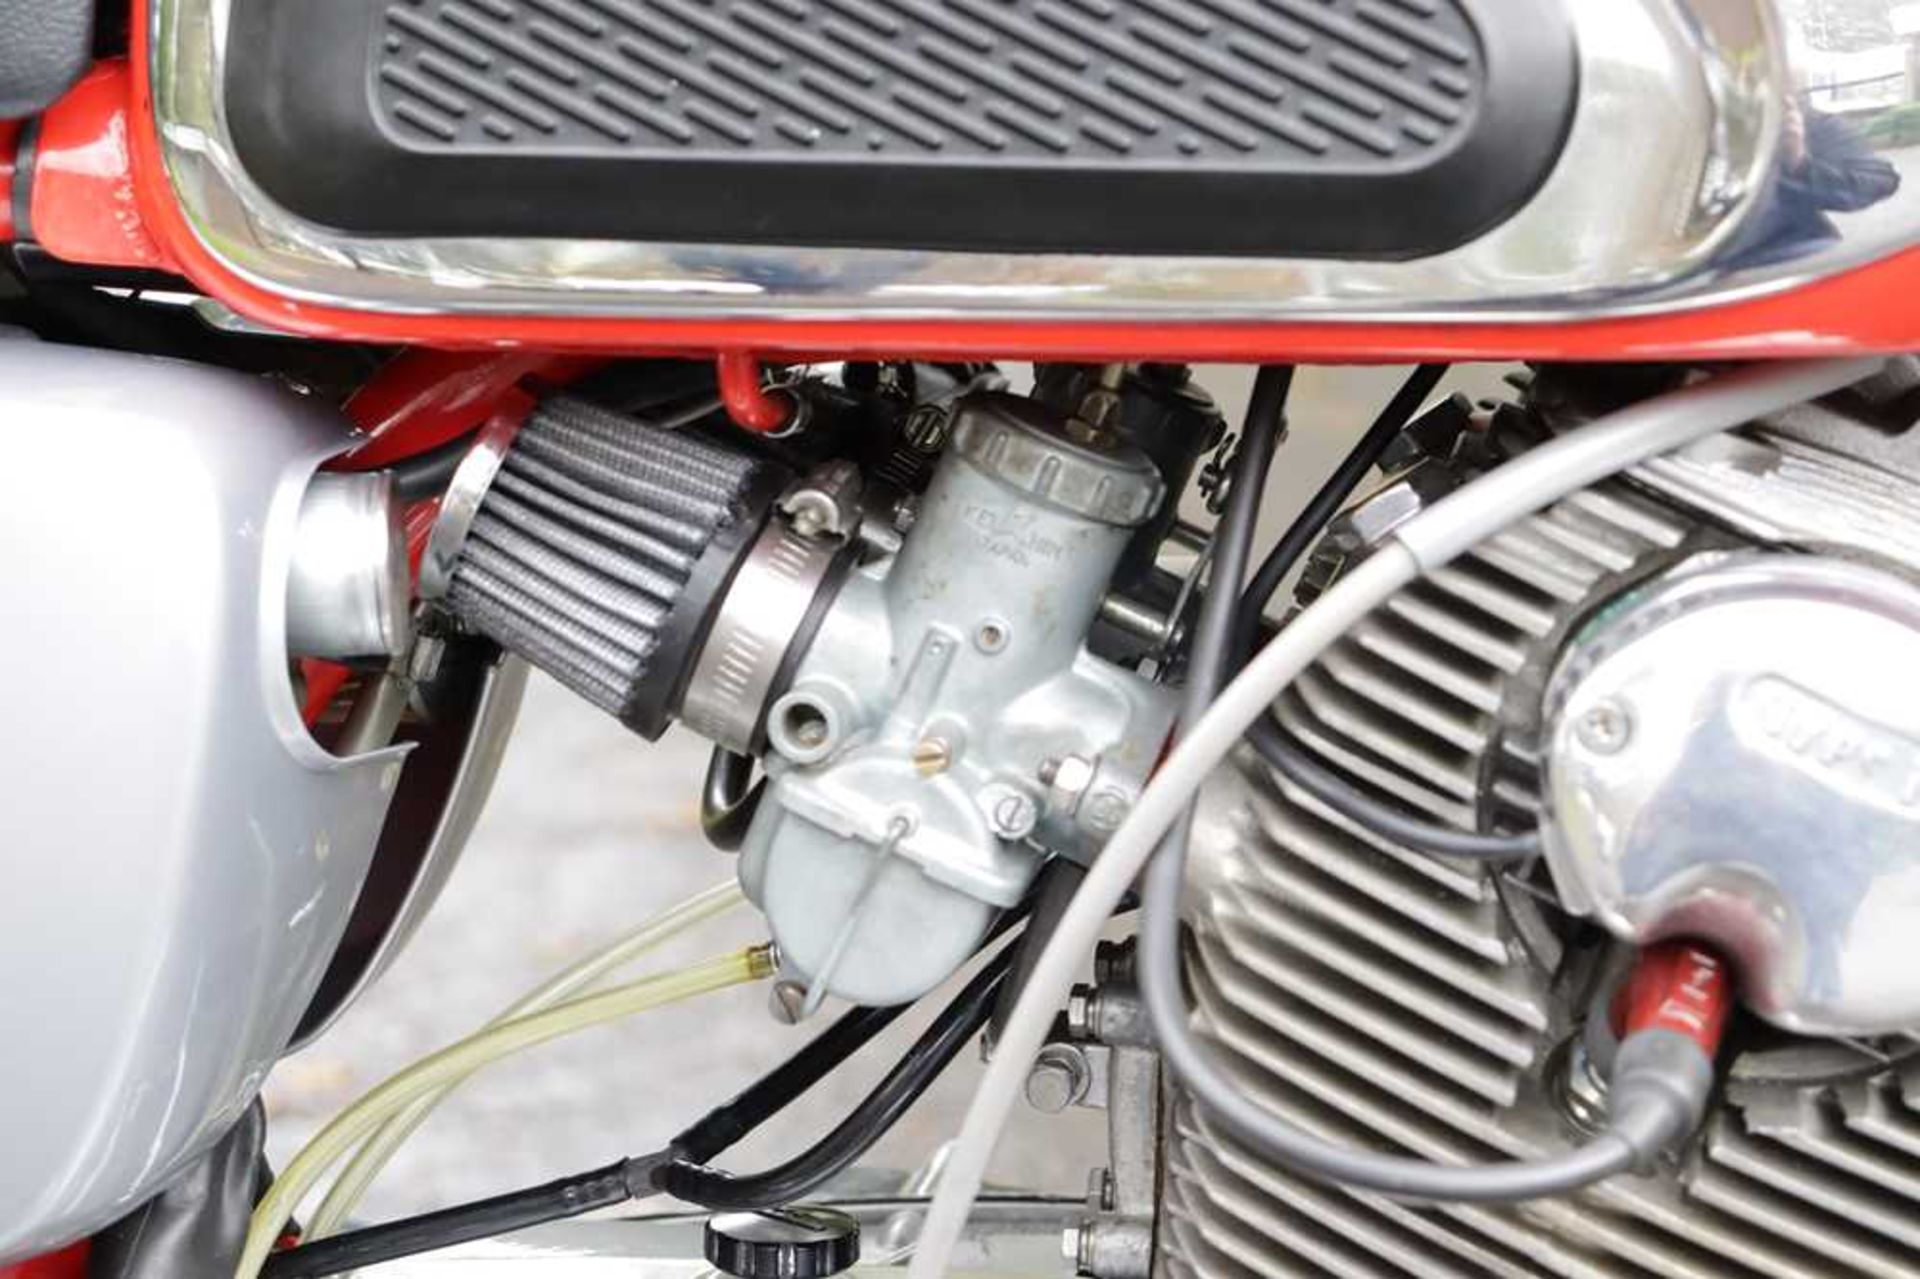 1966 Honda CB77 Restored to a high standard - Image 16 of 65